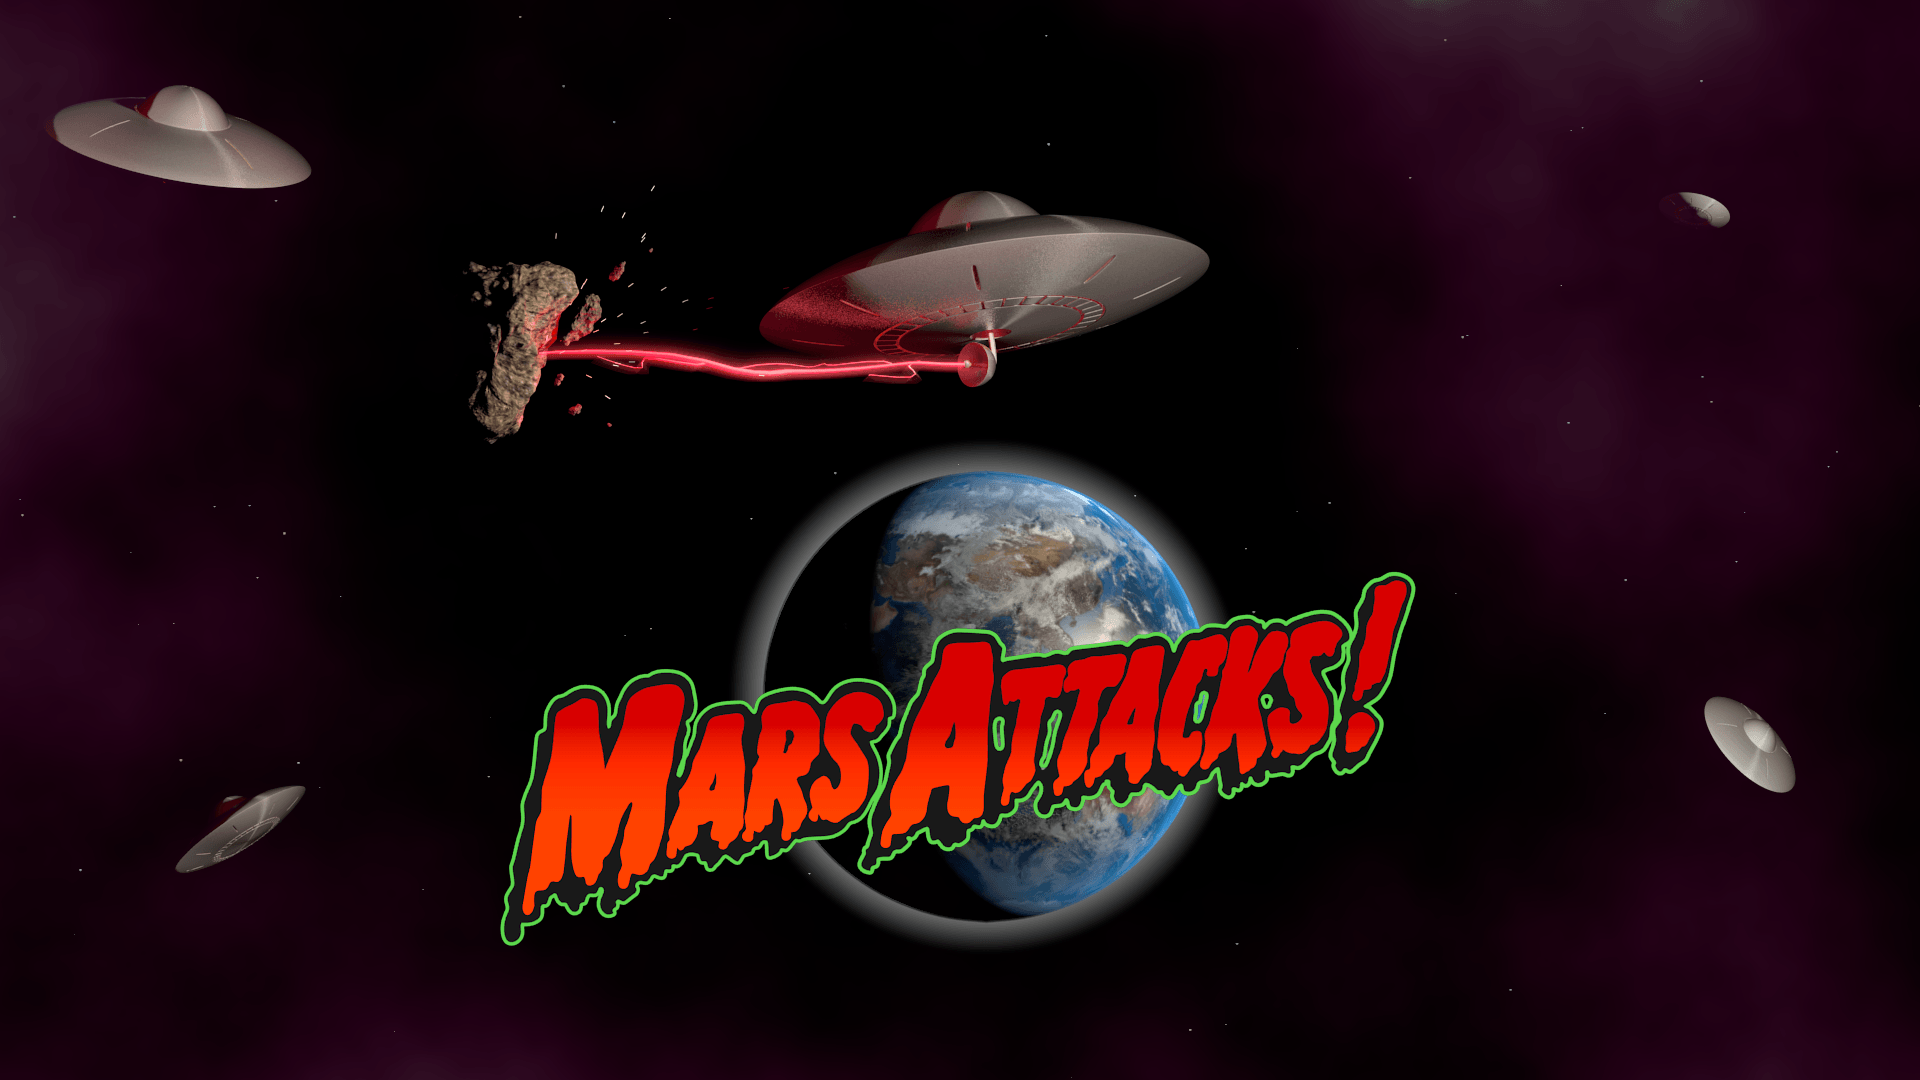 Mars attacks theme image